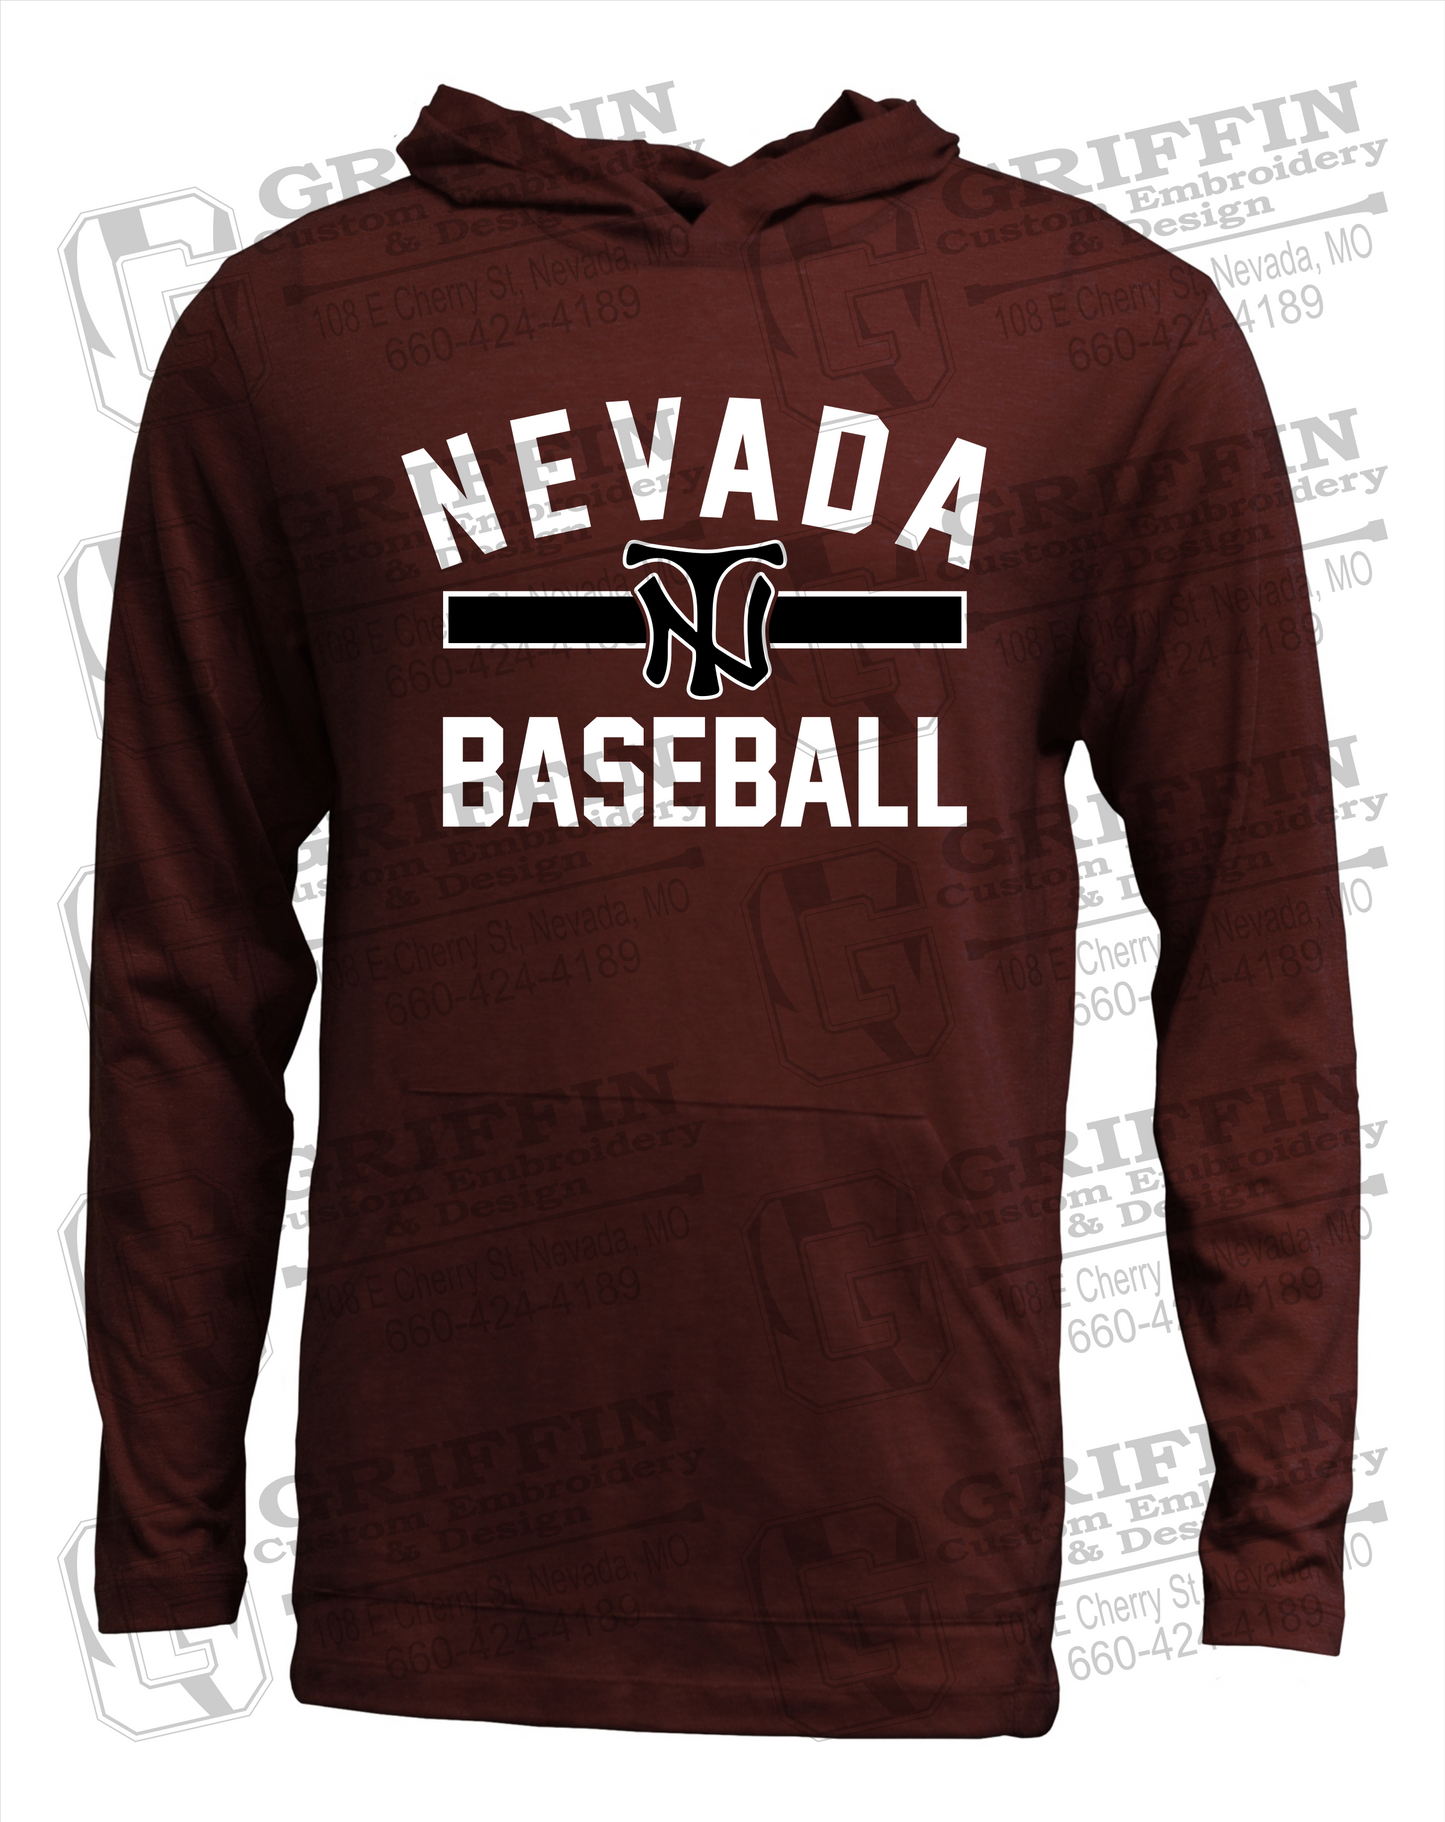 Soft-Tek T-Shirt Hoodie - Baseball - Nevada Tigers 24-Z